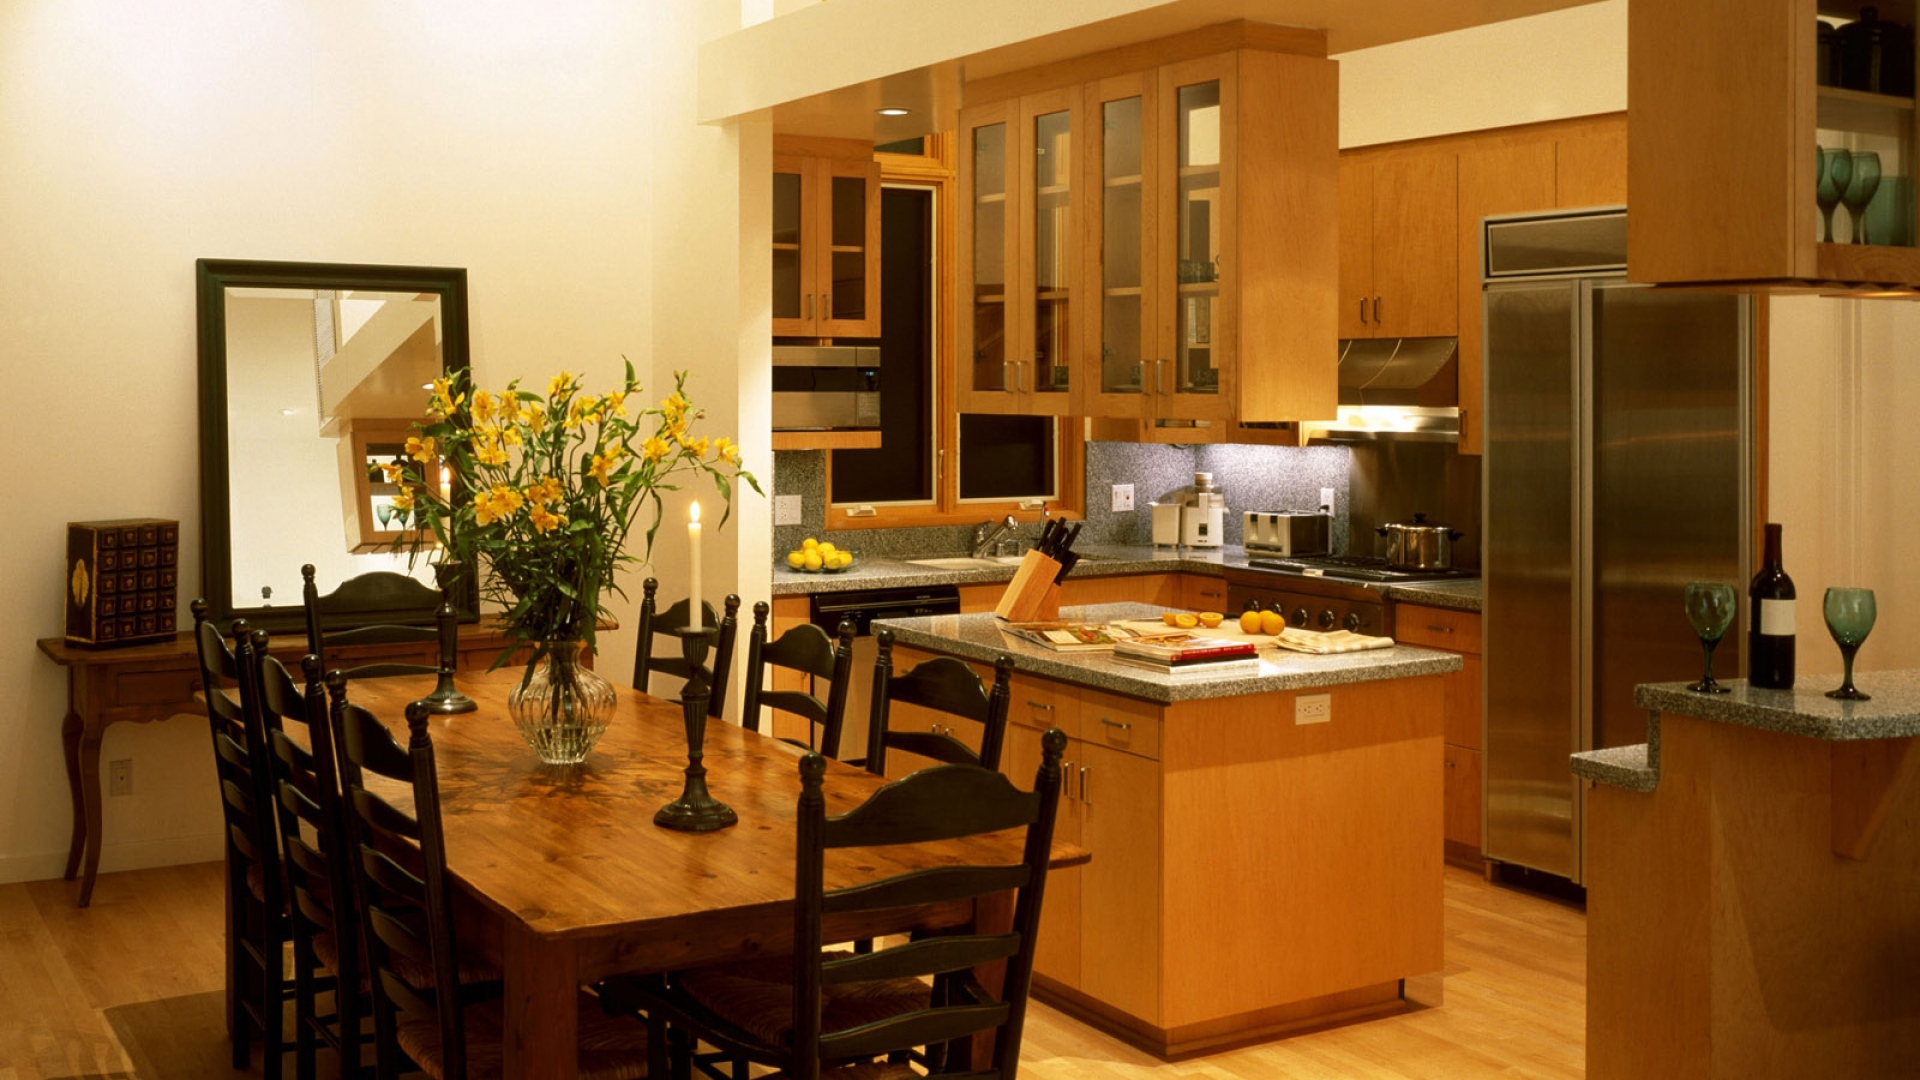 kitchen wallpaper,room,furniture,property,cabinetry,interior design